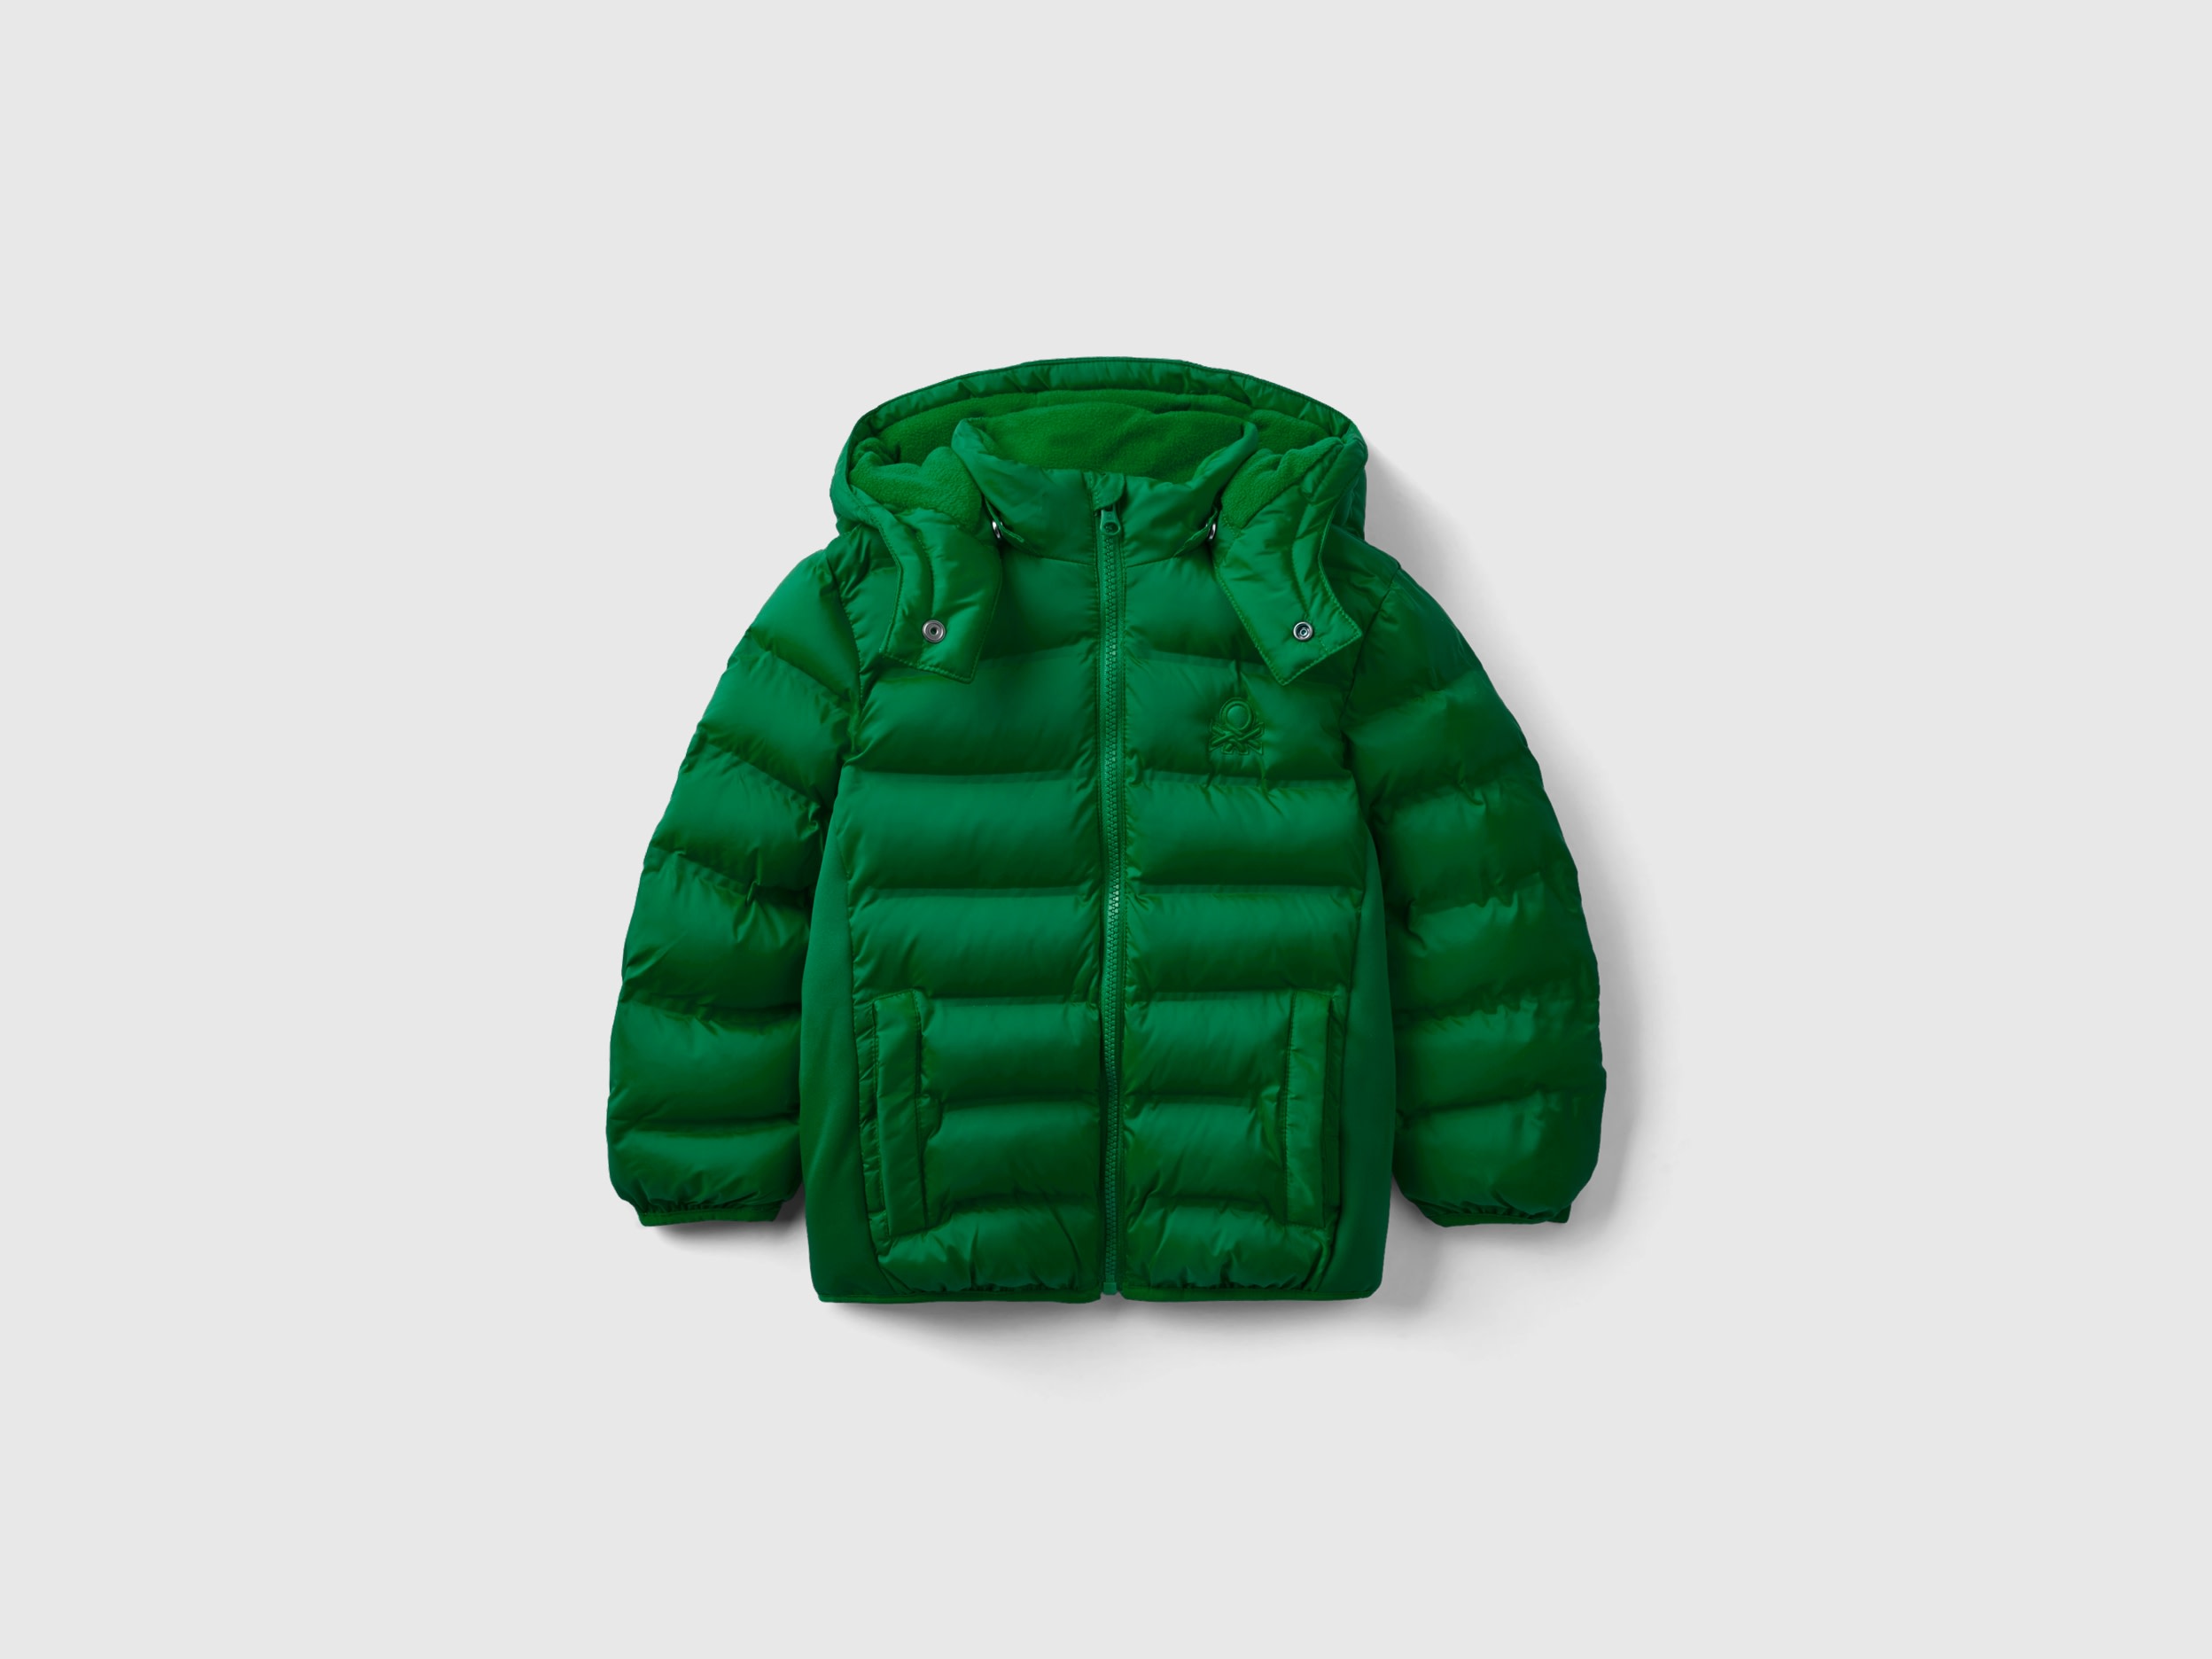 Benetton, Jacket With Neoprene Details, size 12-18, Green, Kids